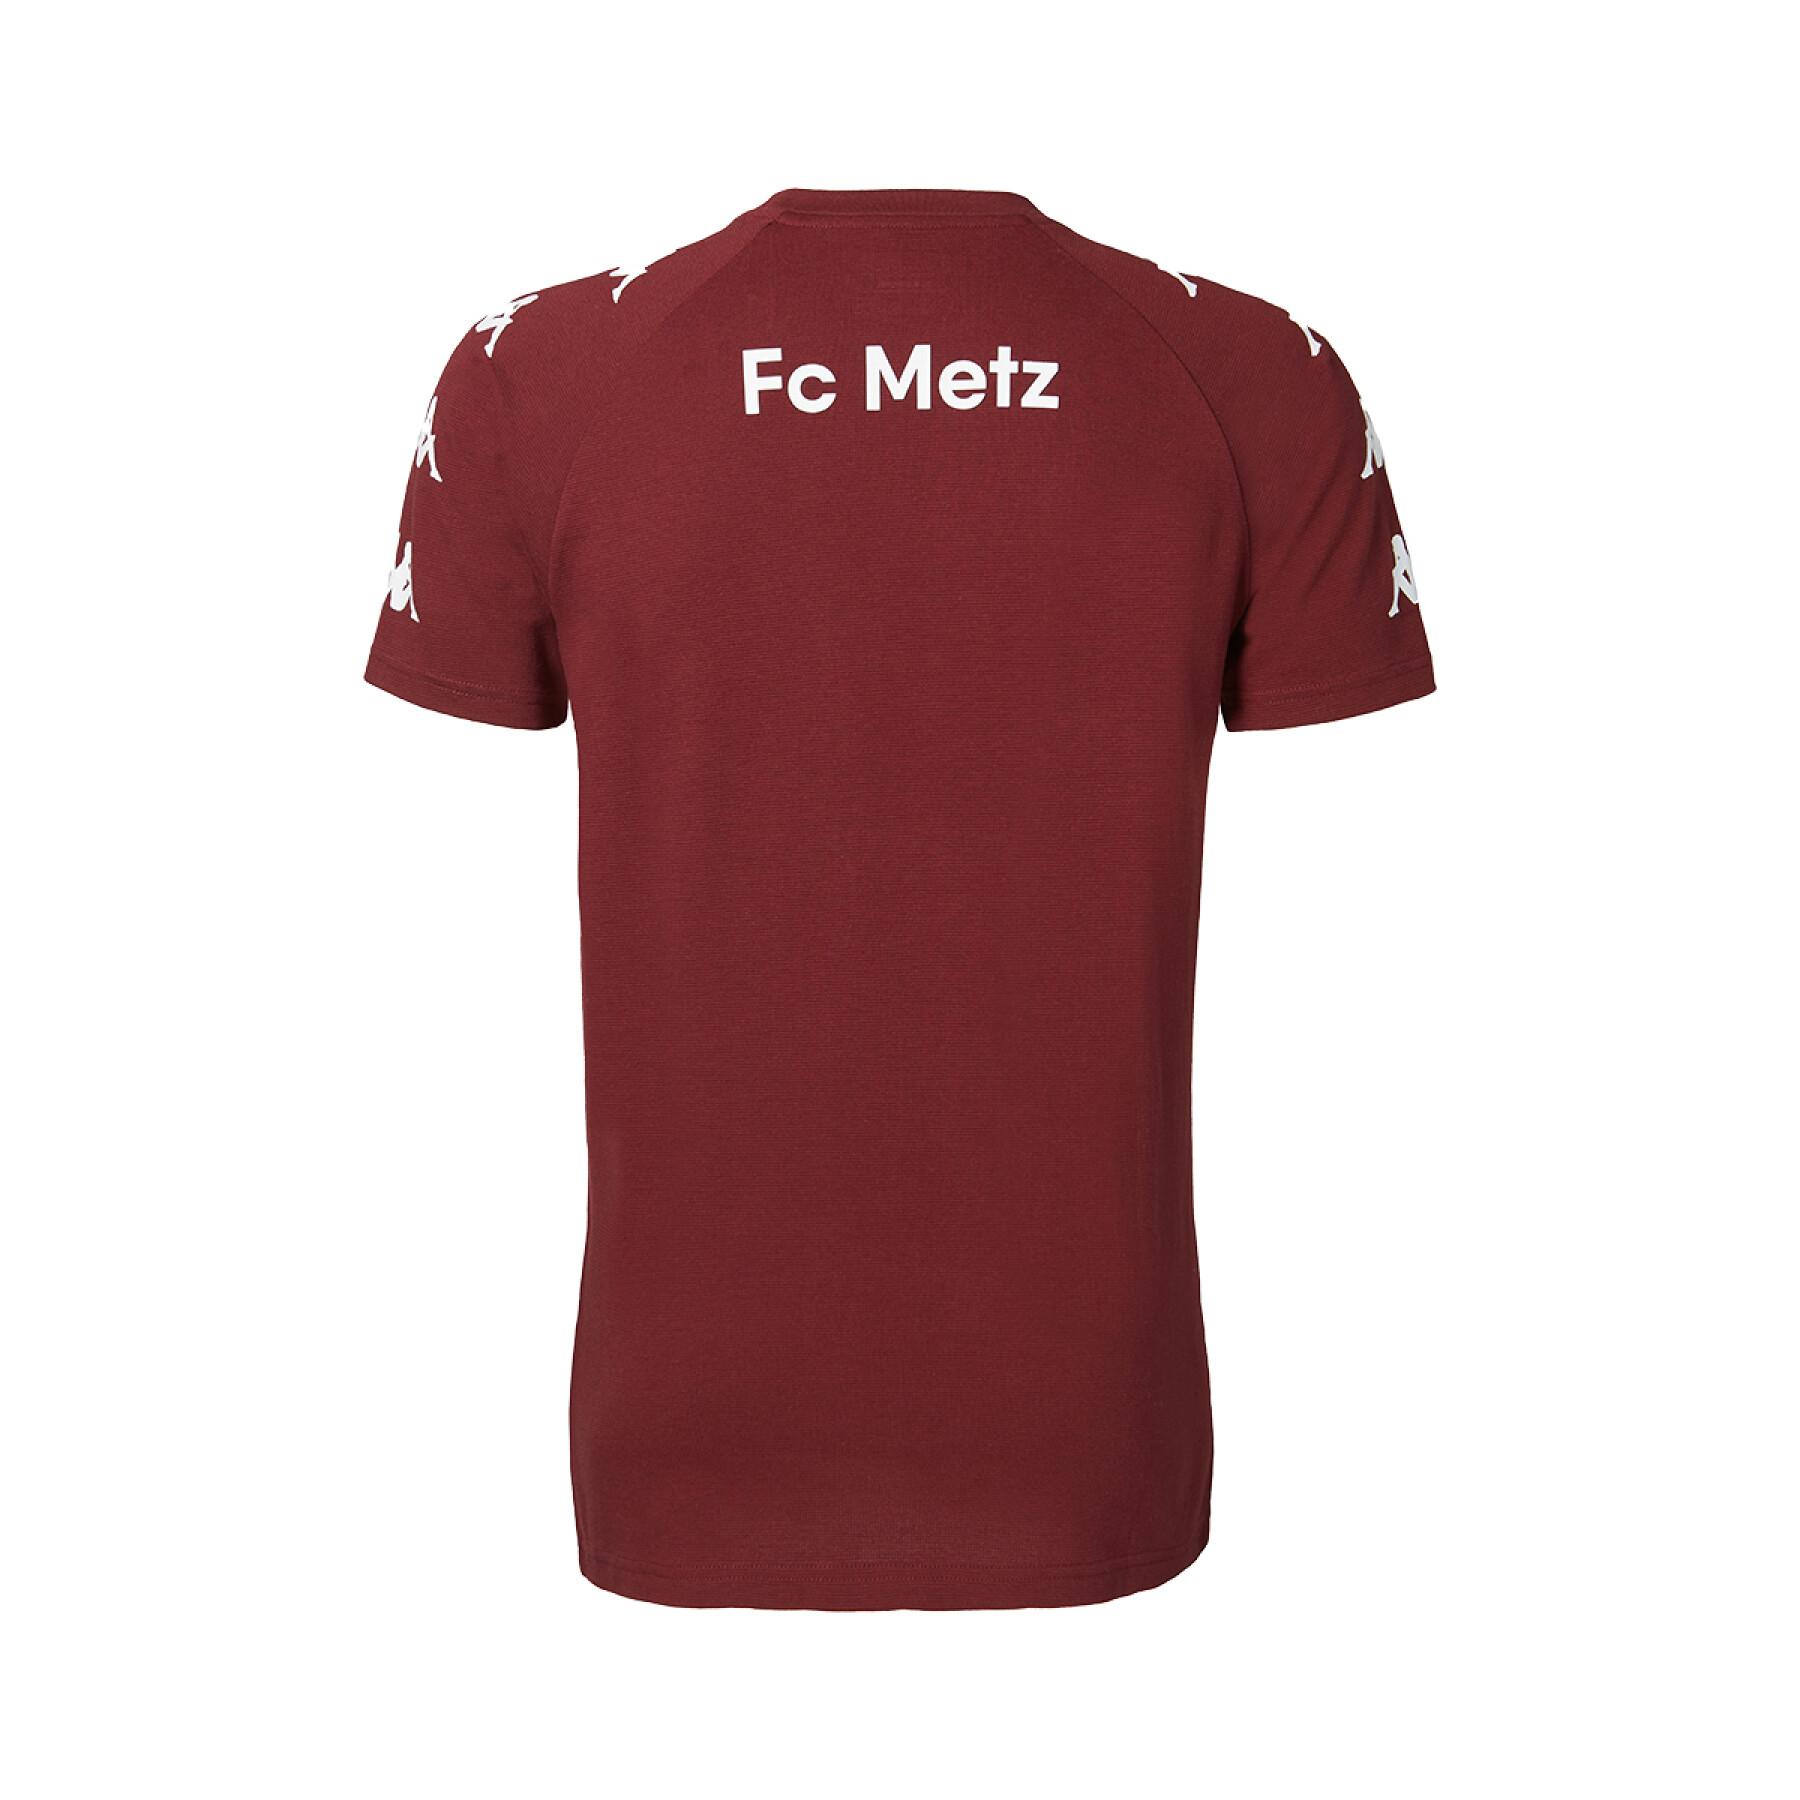 Kinder-T-Shirt FC Metz 2021/22 ancone